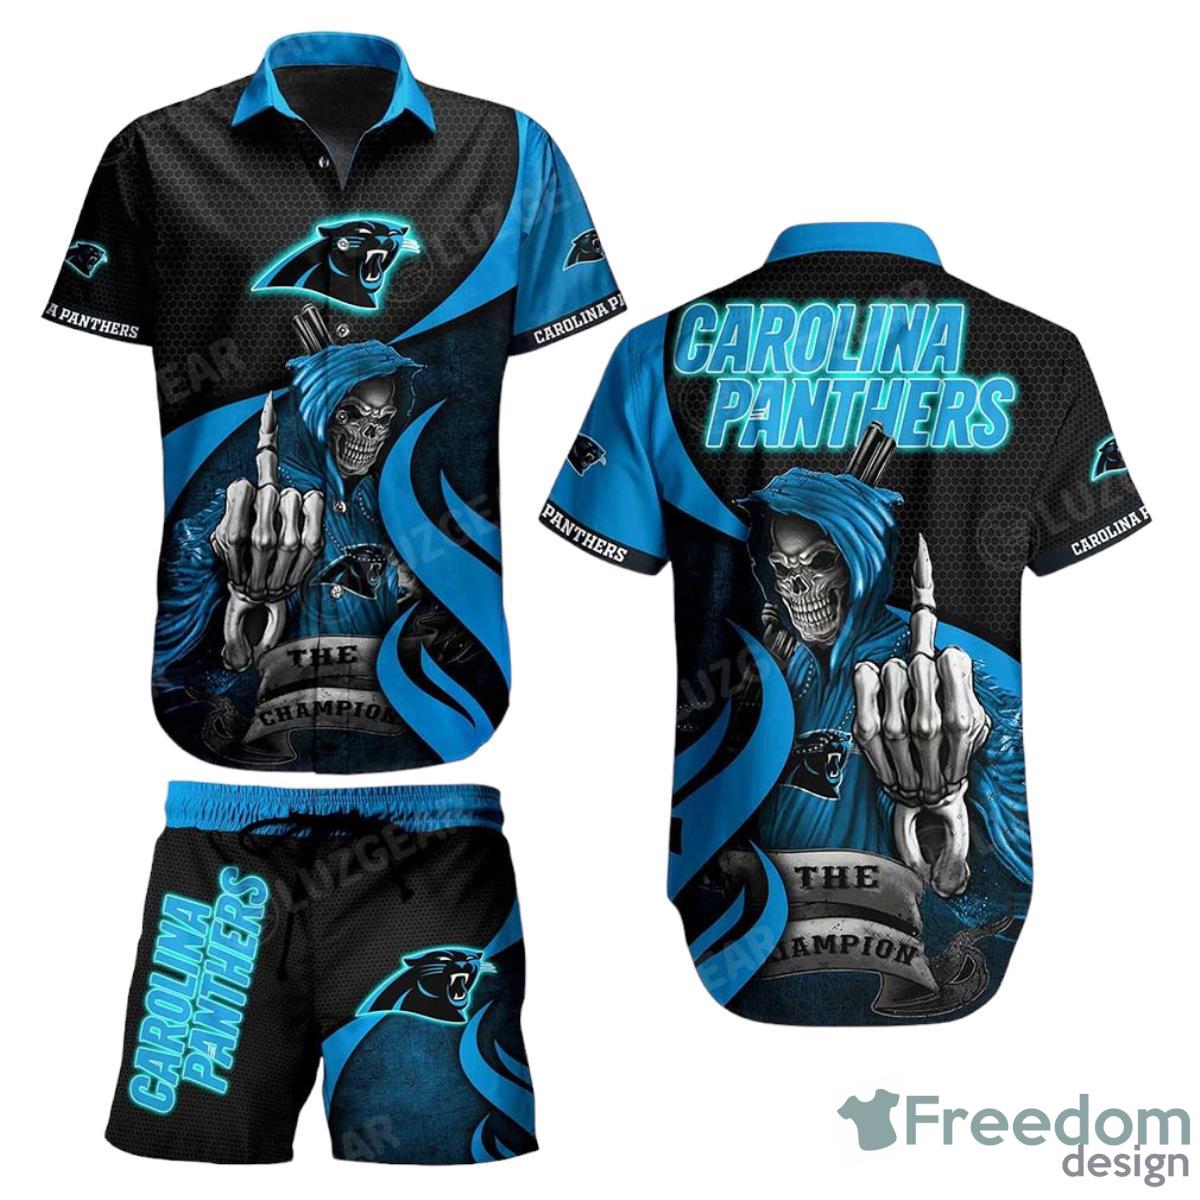 Carolina Panthers NFL Football Hawaiian Shirt And Short Graphic Summer The Champion Gift For Men Women Product Photo 1